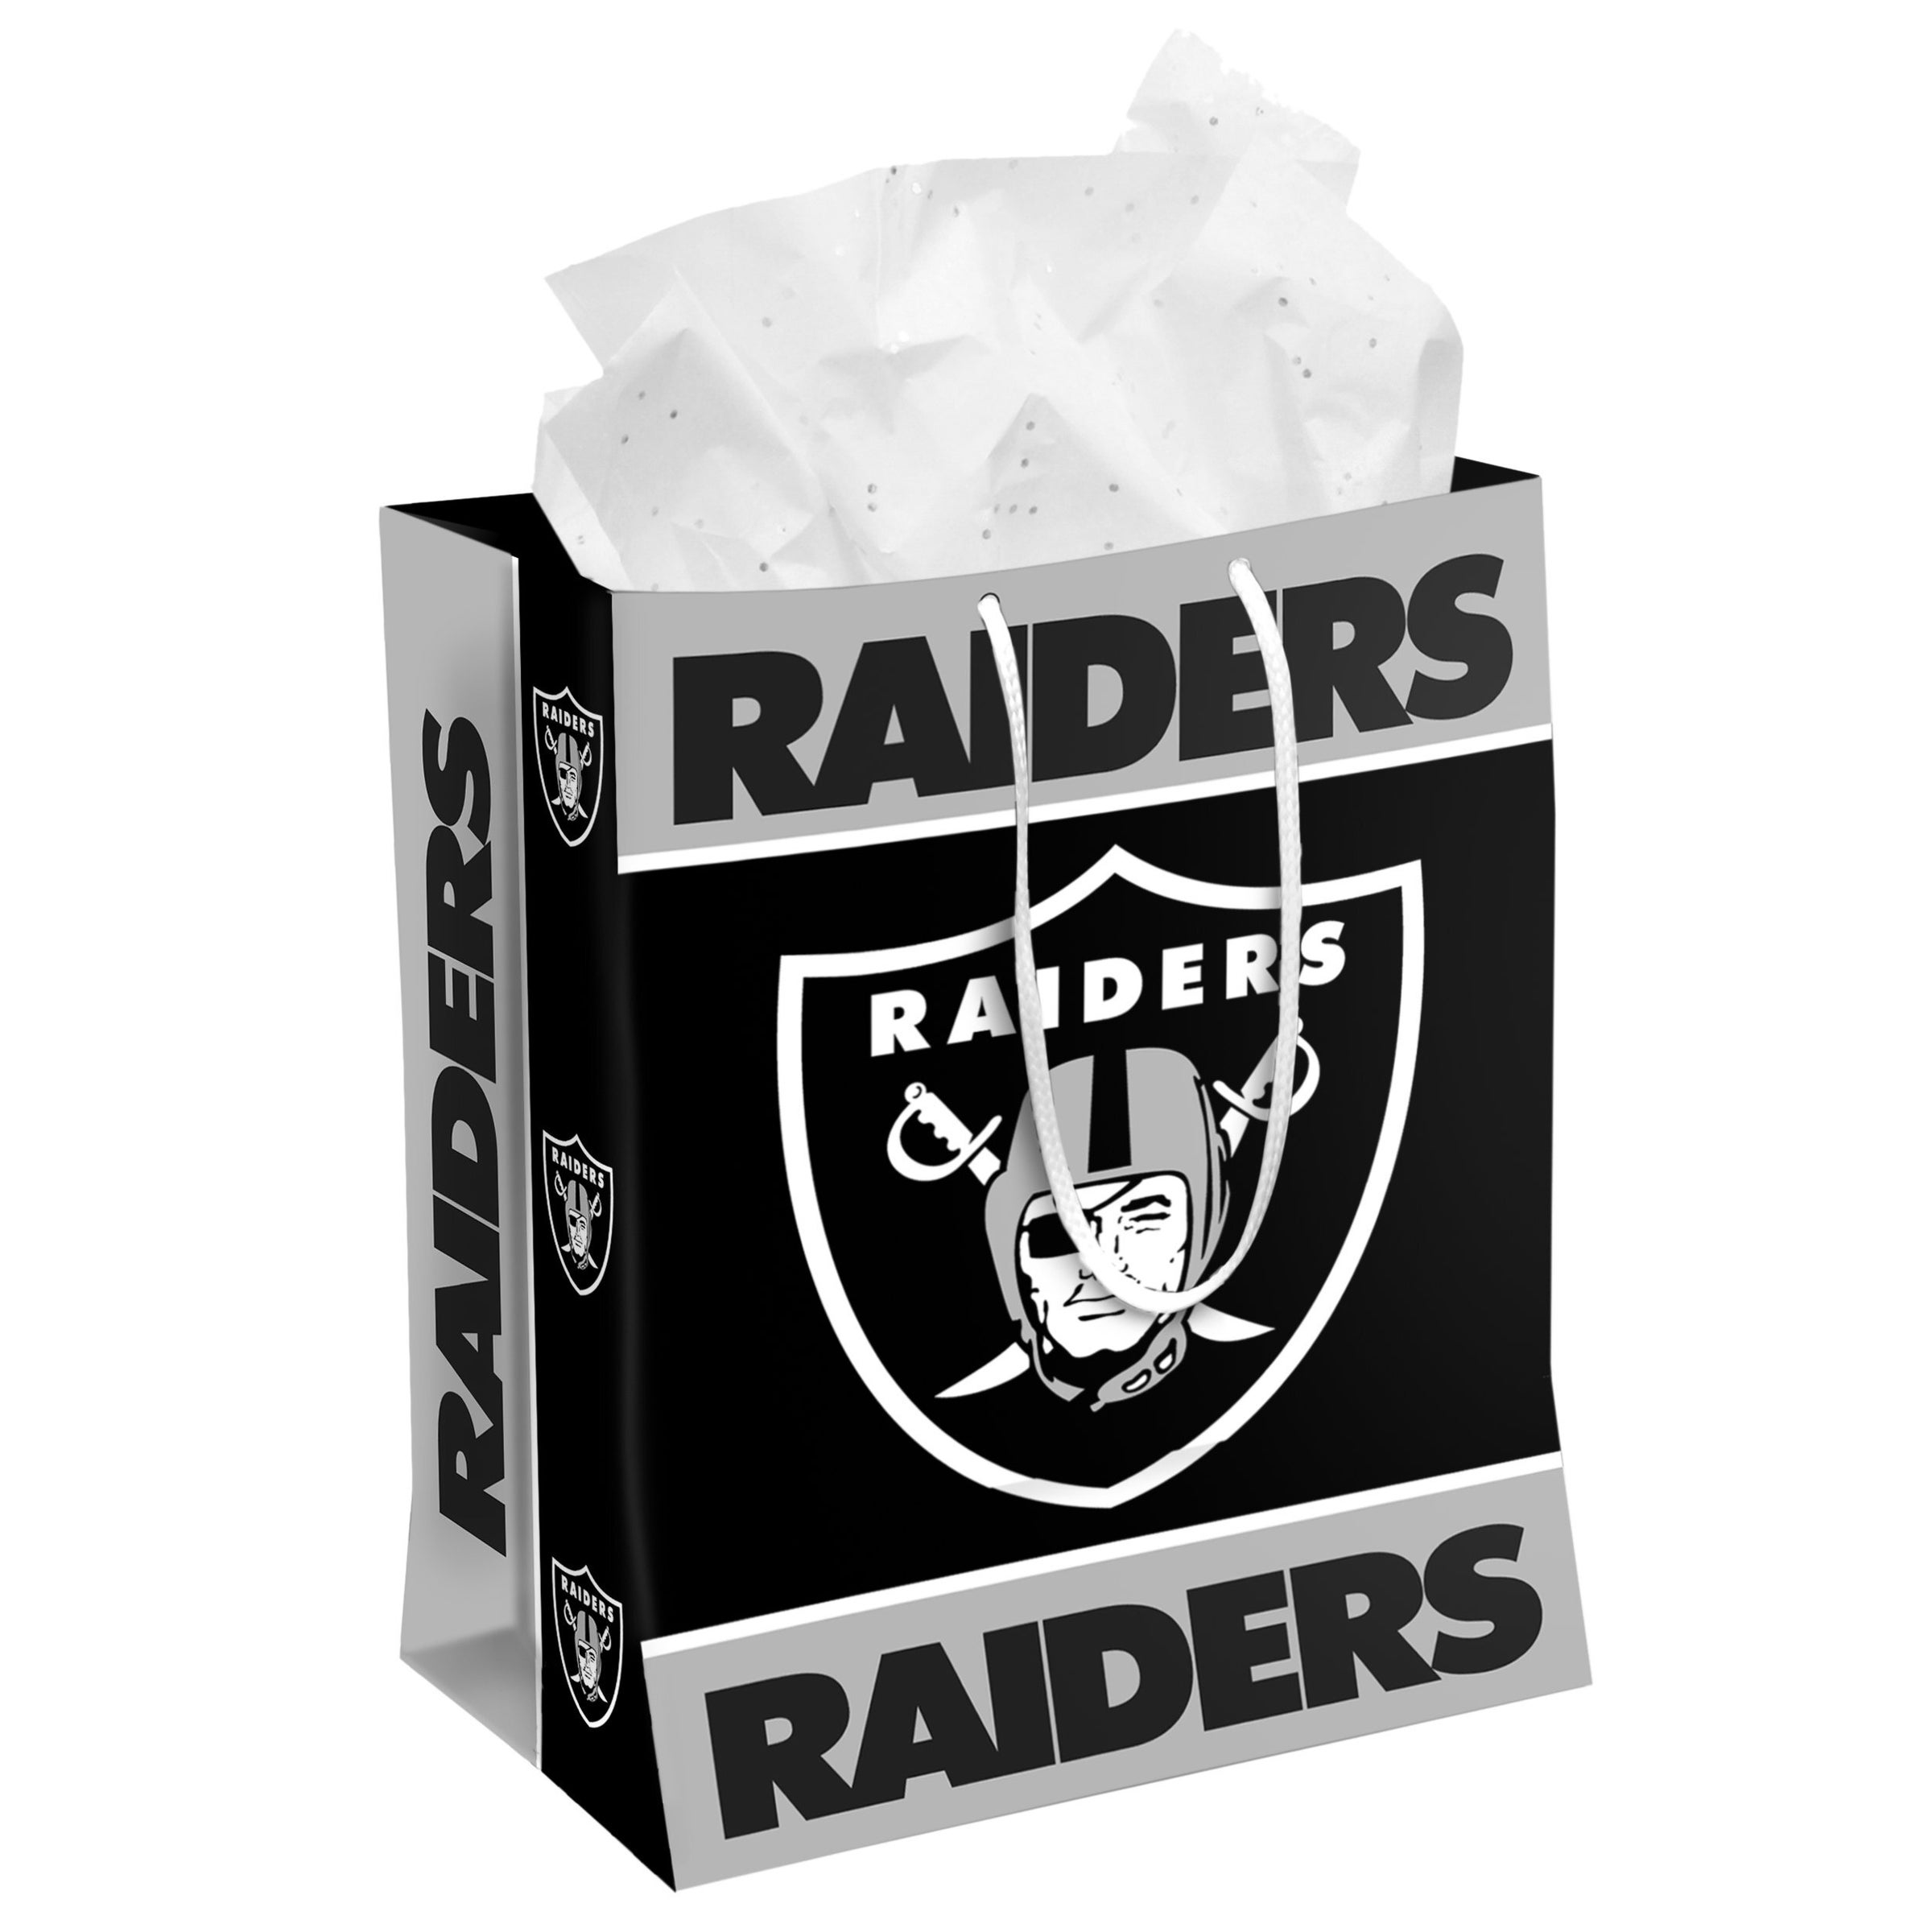 Las Vegas Raiders Medium Size Gift Bag